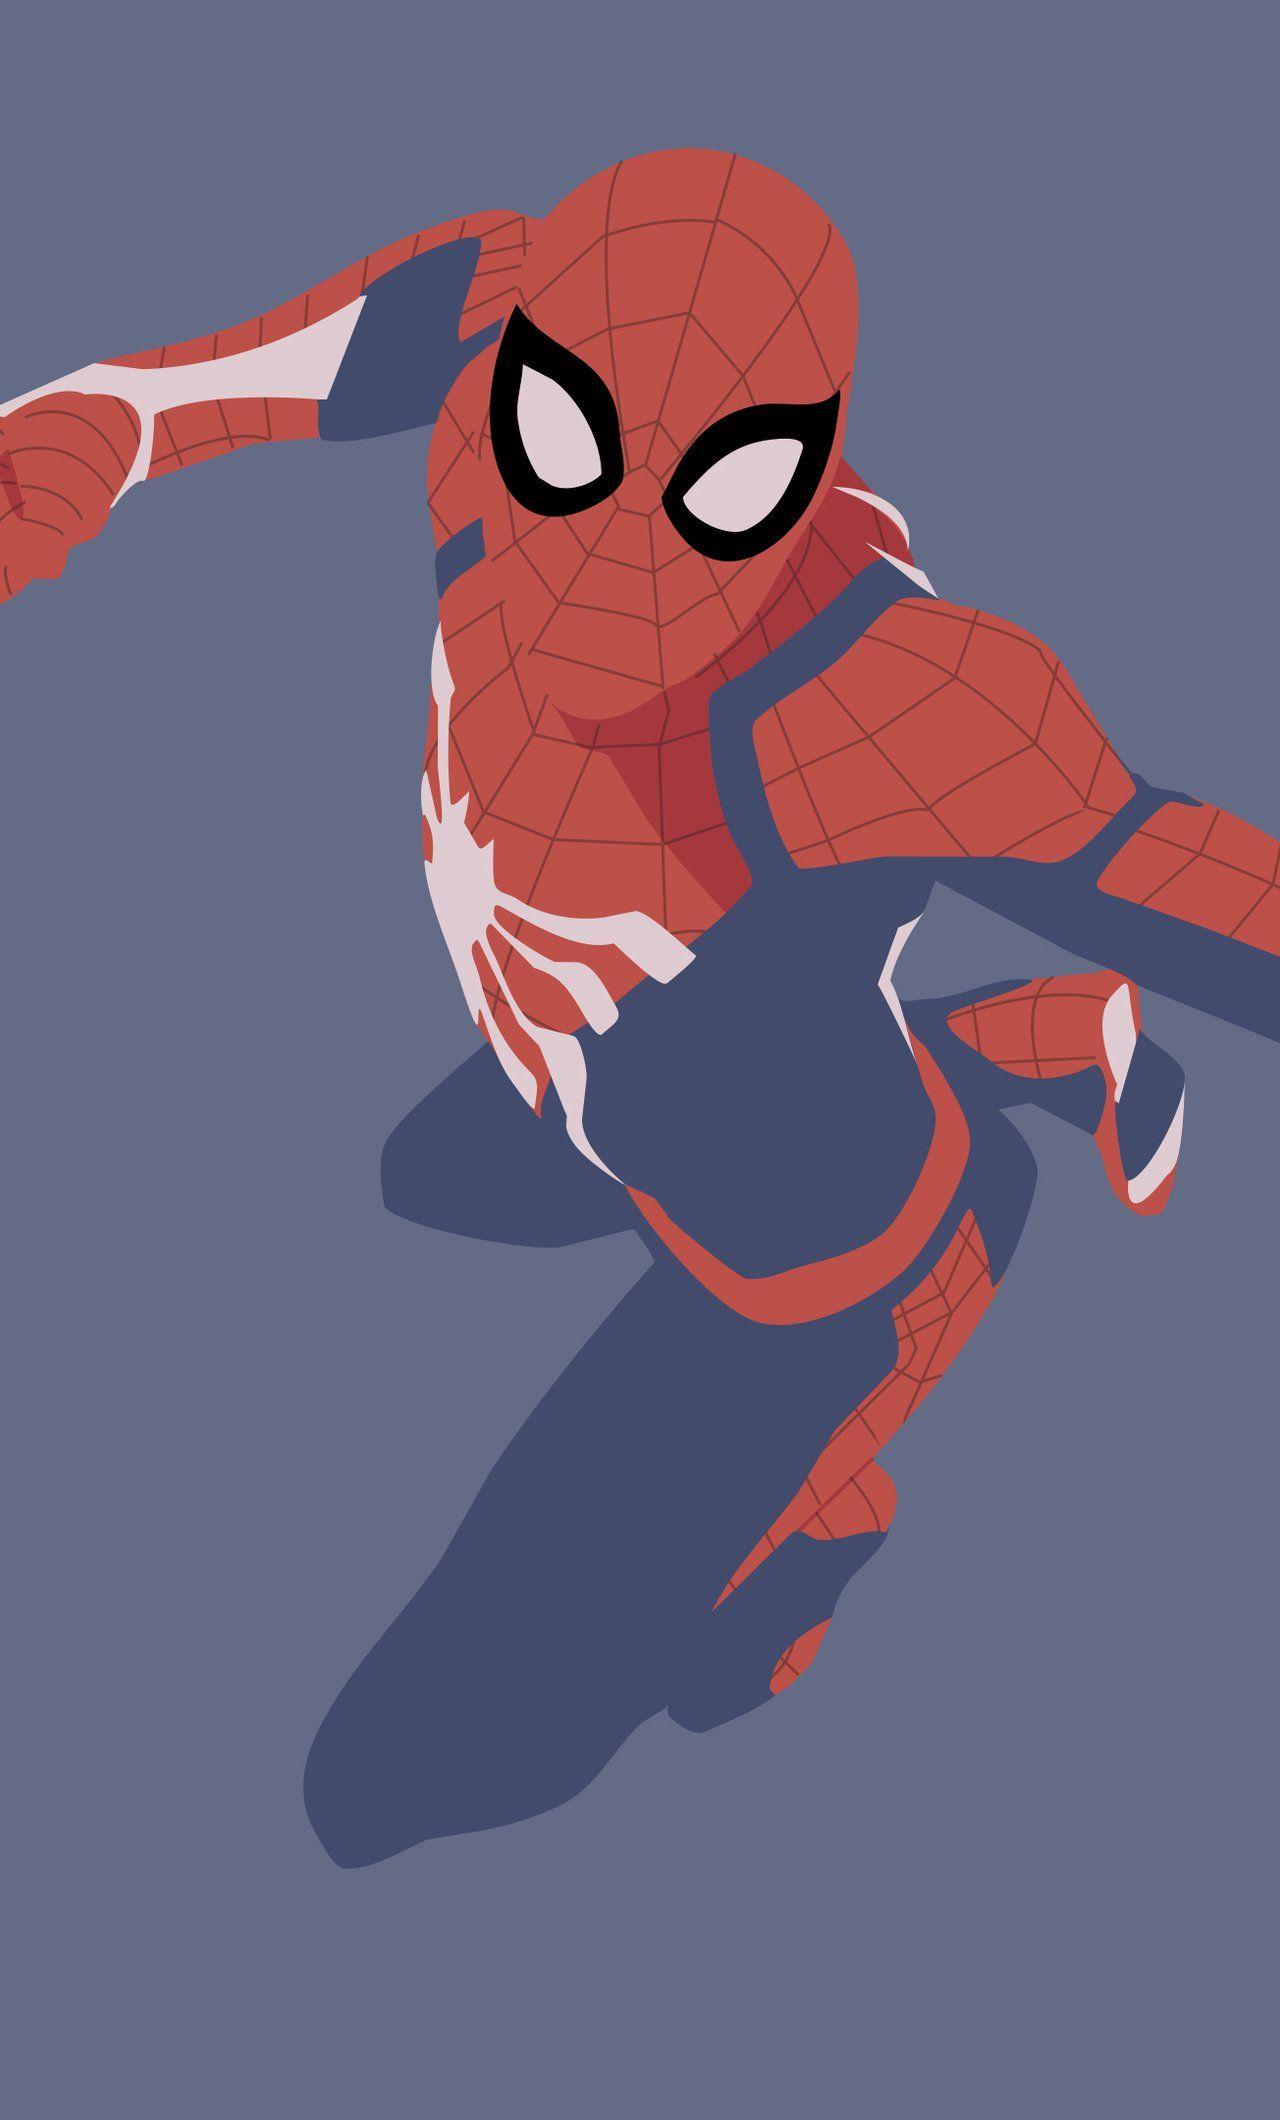 Spiderman Aesthetic Wallpapers - Top Free Spiderman Aesthetic ...